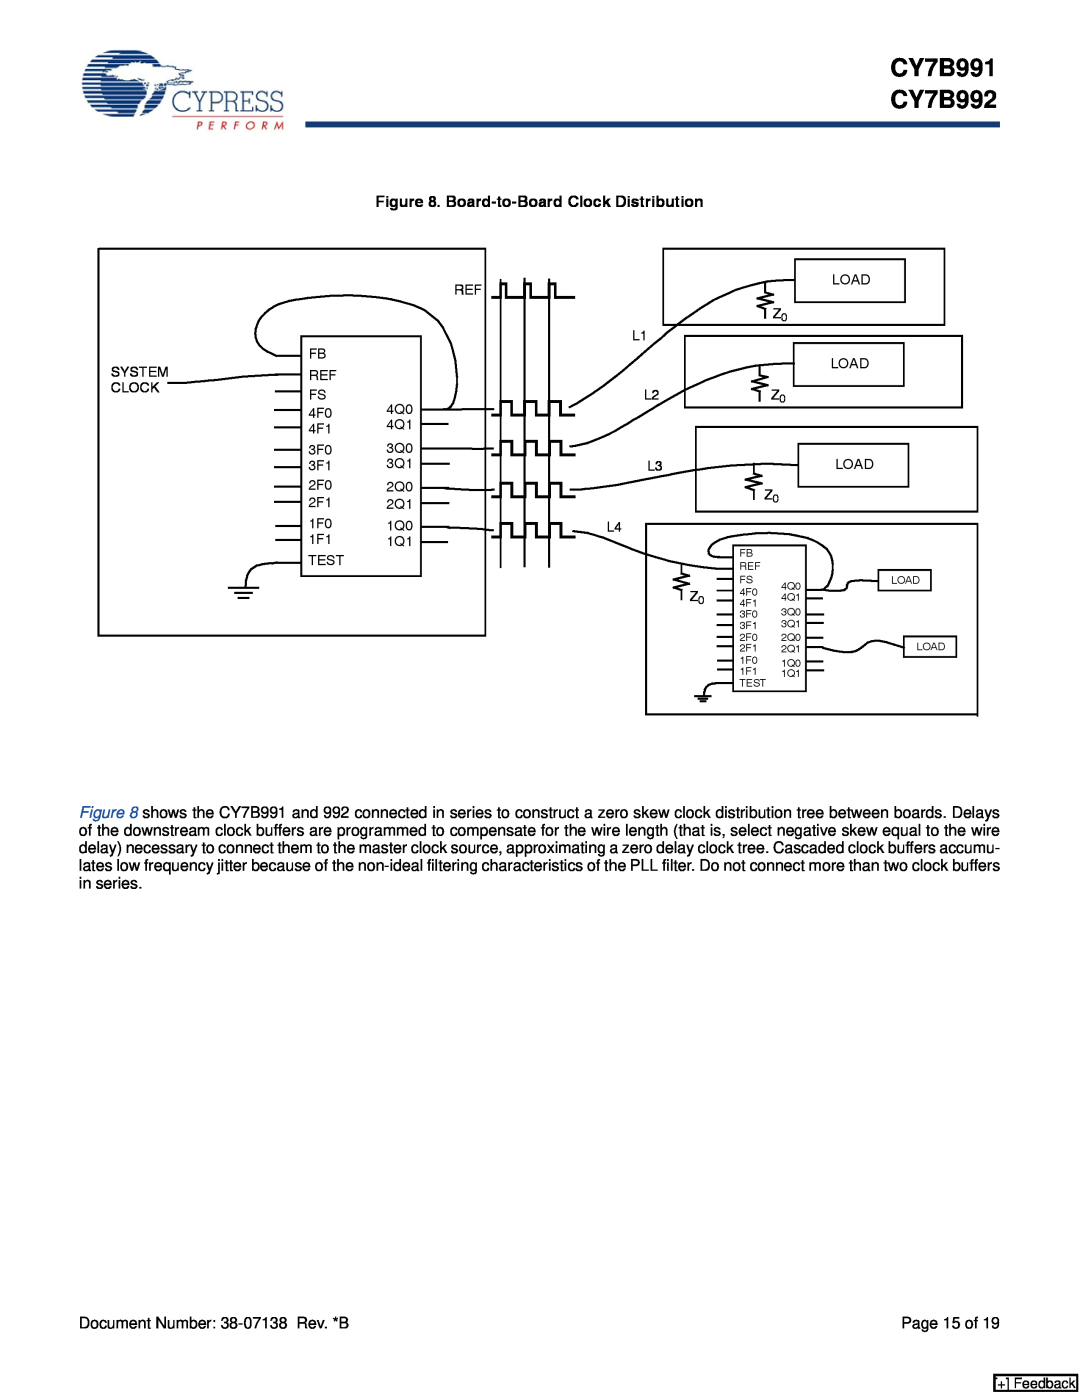 Cypress manual Board-to-Board Clock Distribution, CY7B991 CY7B992, Page 15 of 